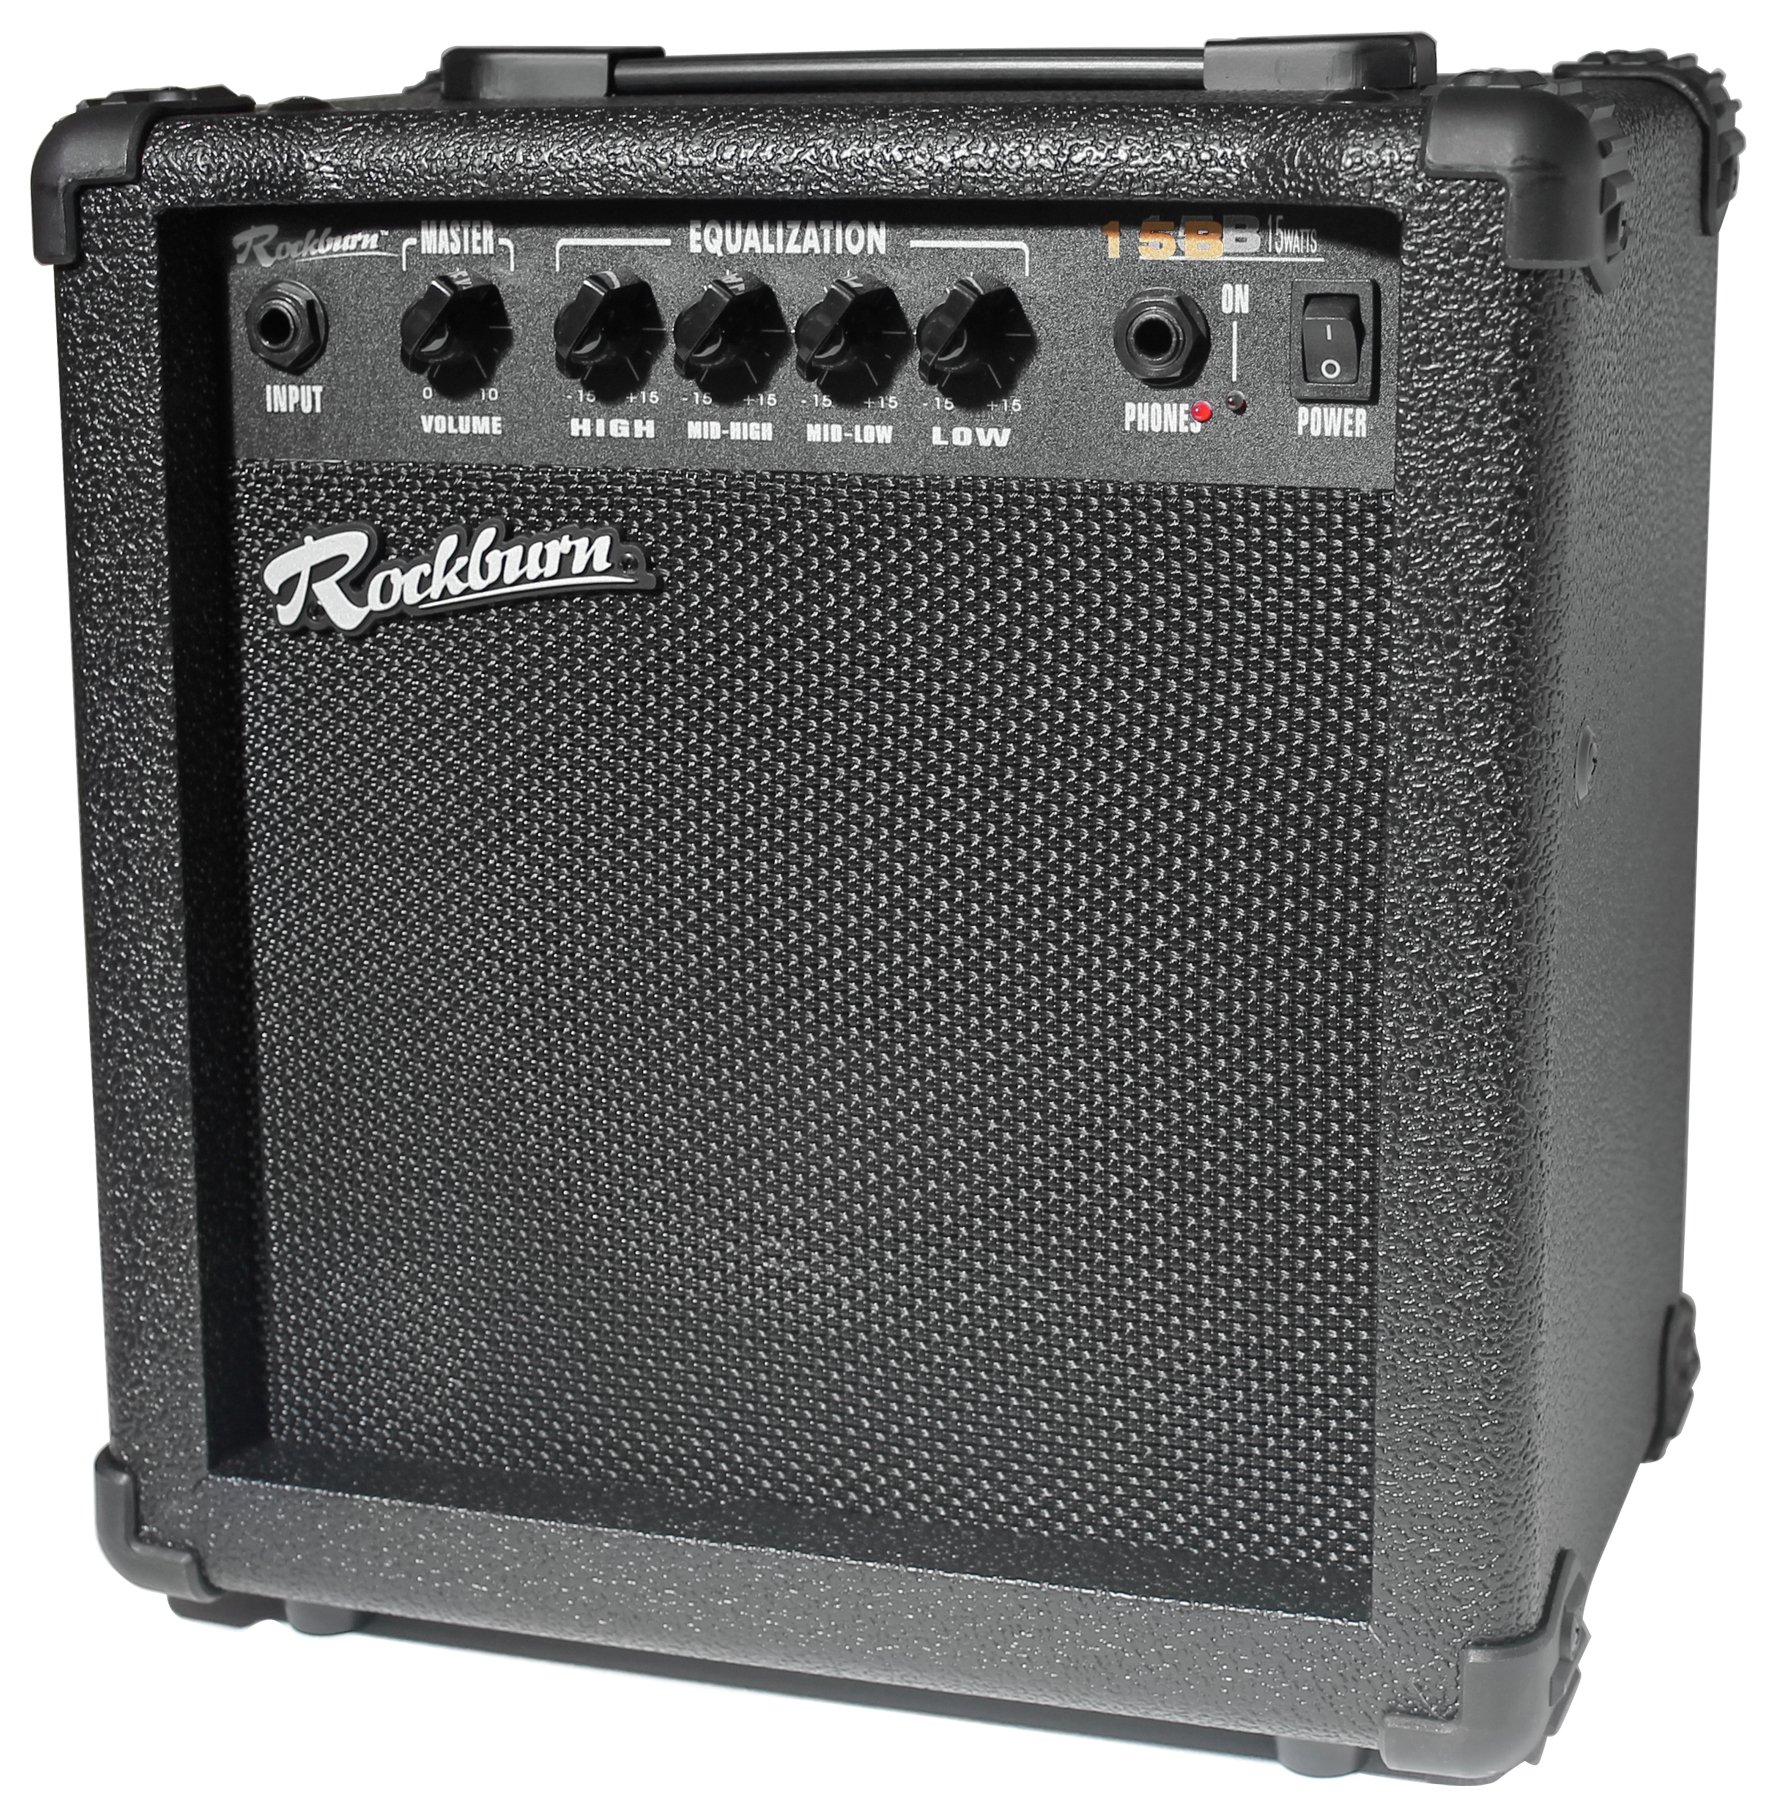 Rockburn 15 Watt Bass Amp